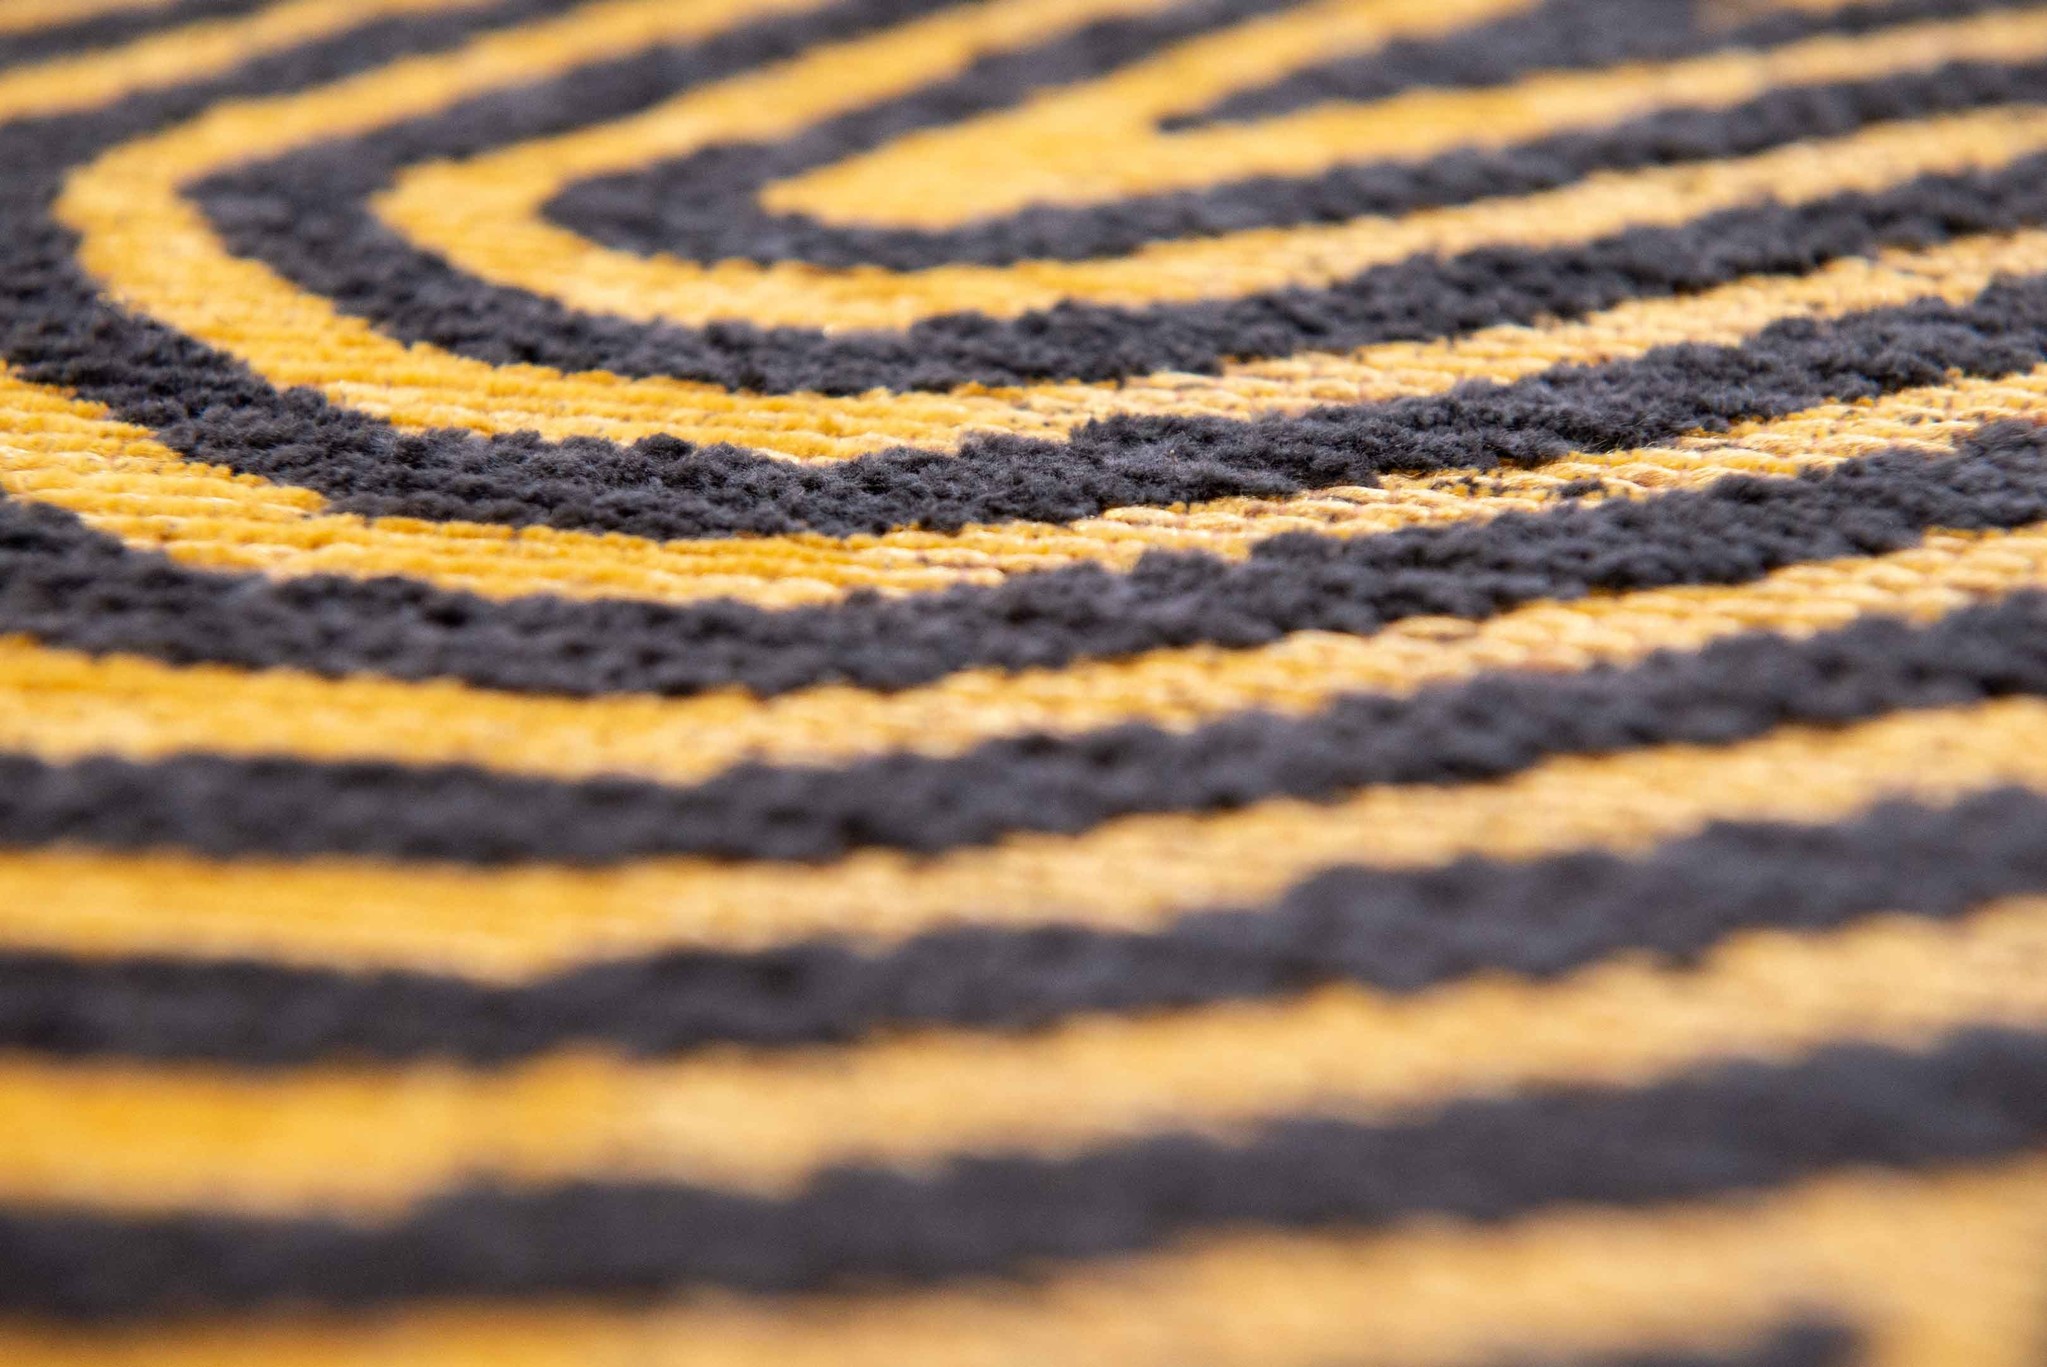 Black Gold Flatwoven Rug ☞ Size: 4' 7" x 6' 7" (140 x 200 cm)